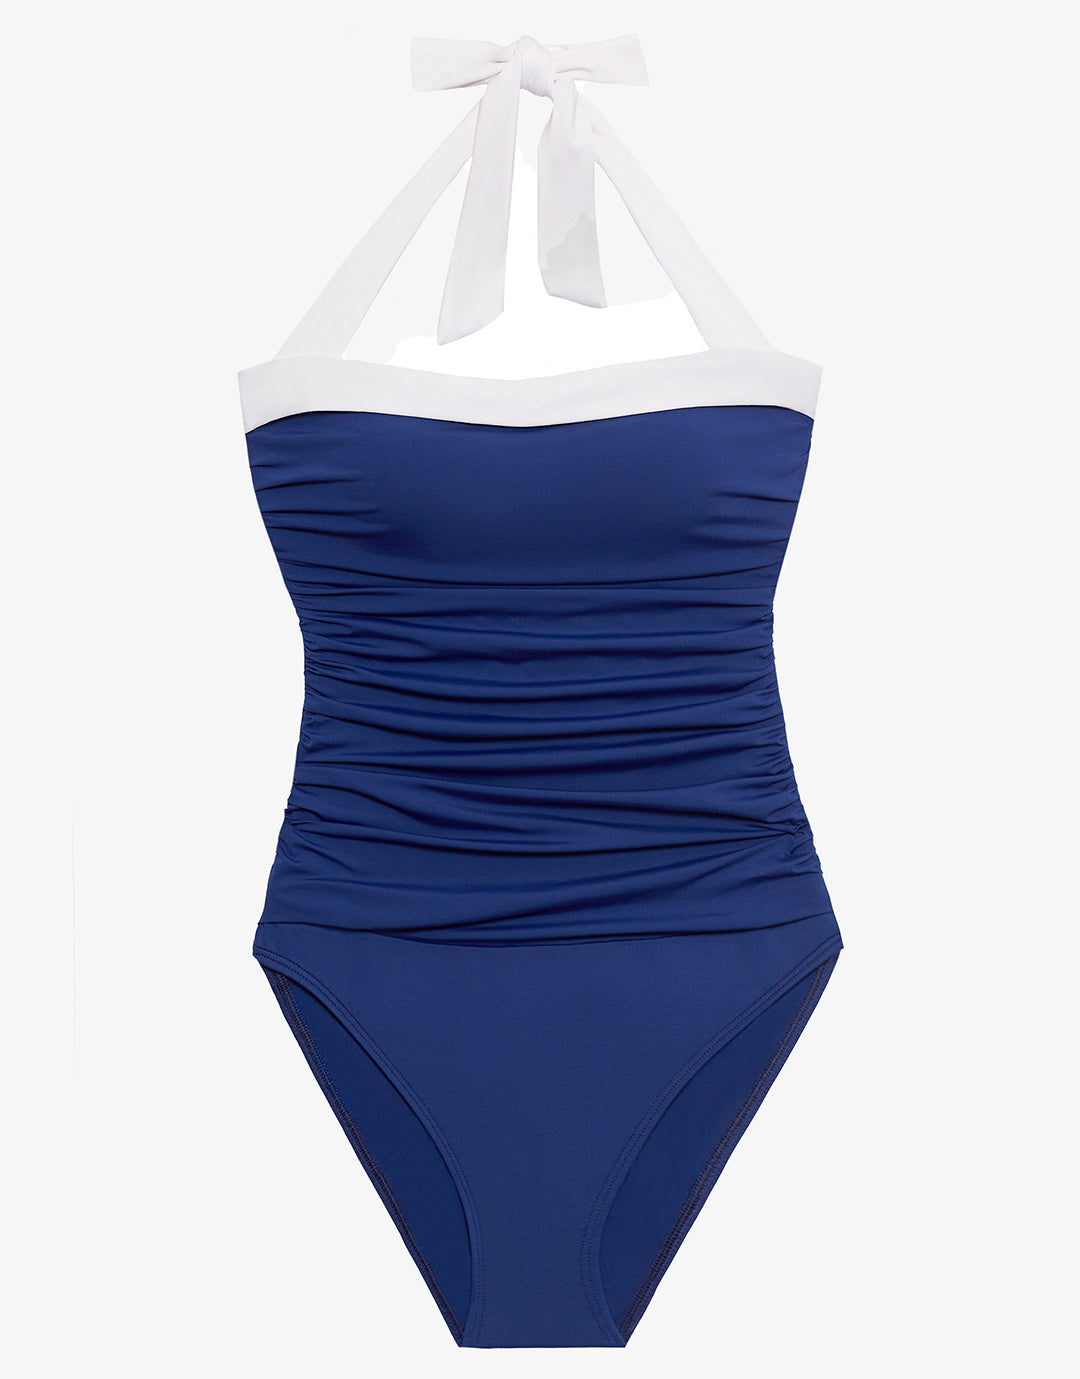 Bel Air Mio Bandeau Swimsuit - Sapphire - Simply Beach UK